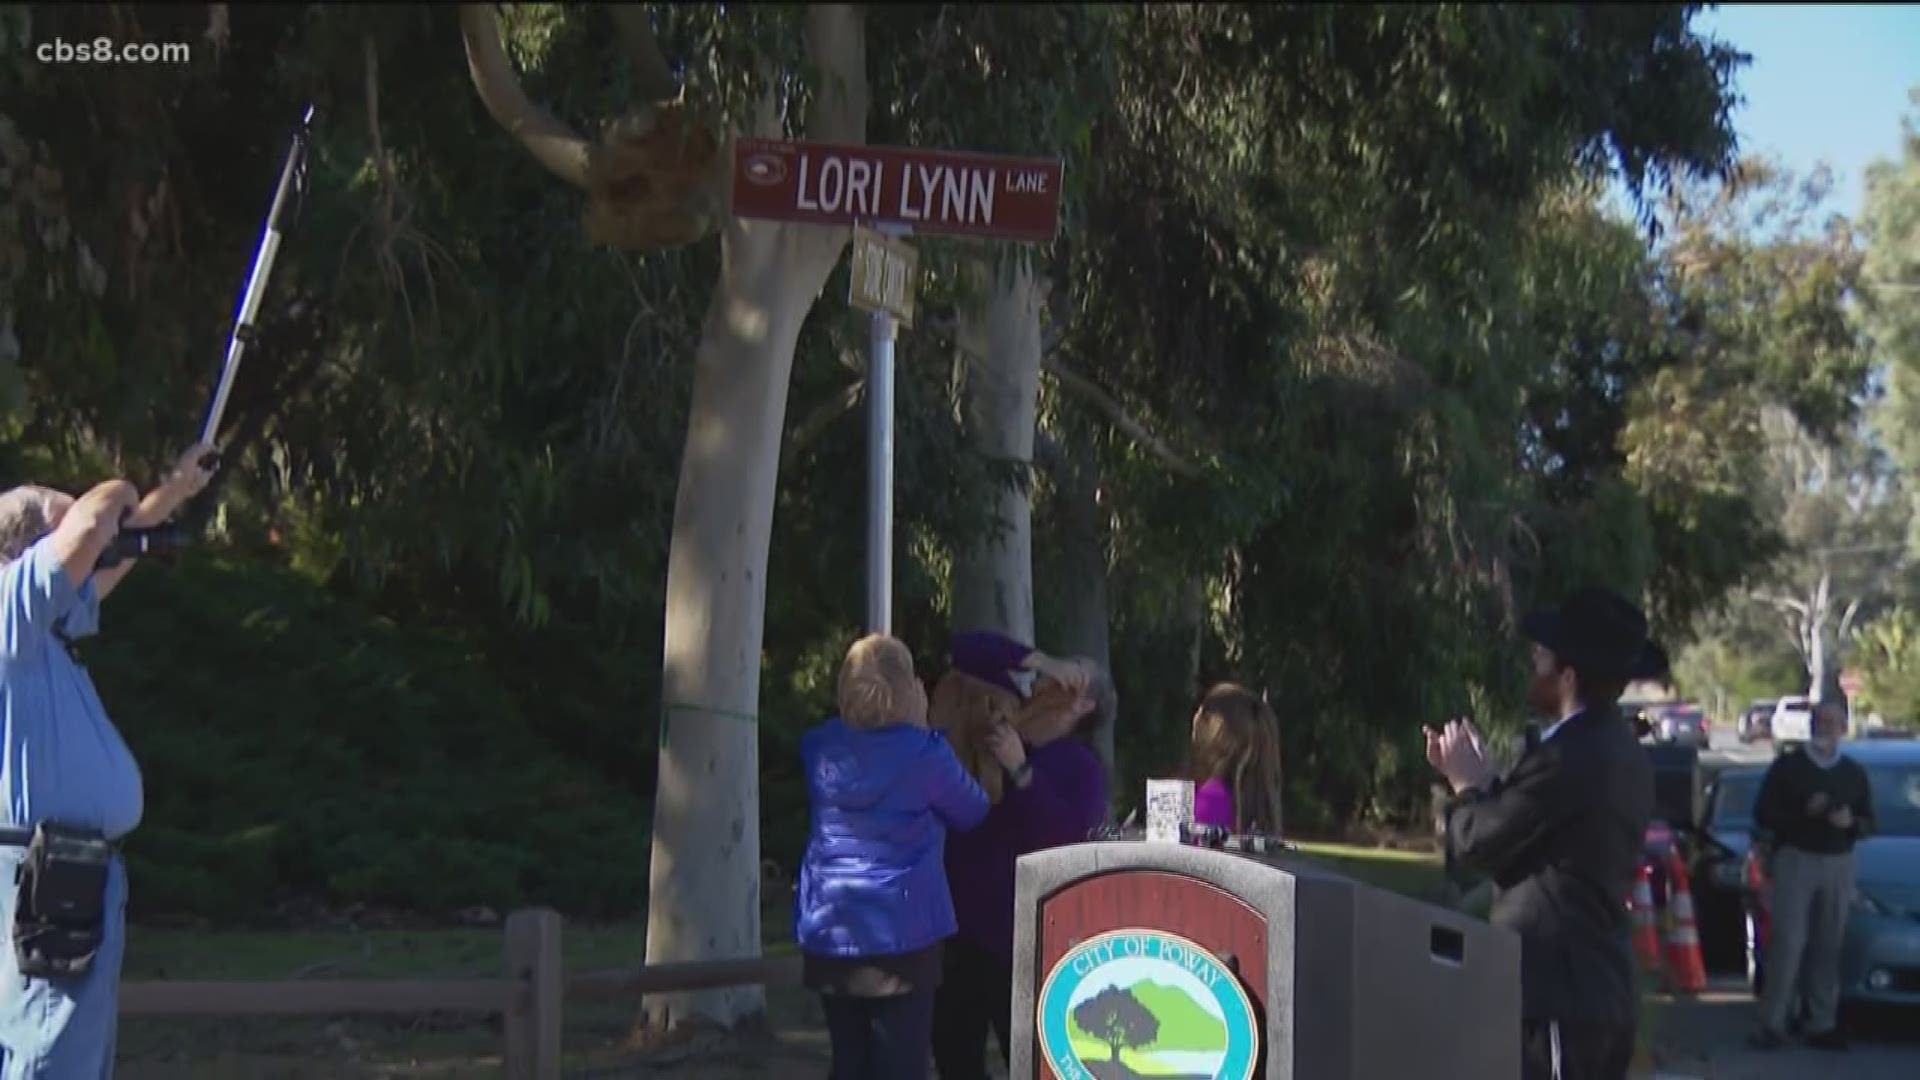 Eva Drive in Poway was renamed on Poway to Lori Lynn Lane.